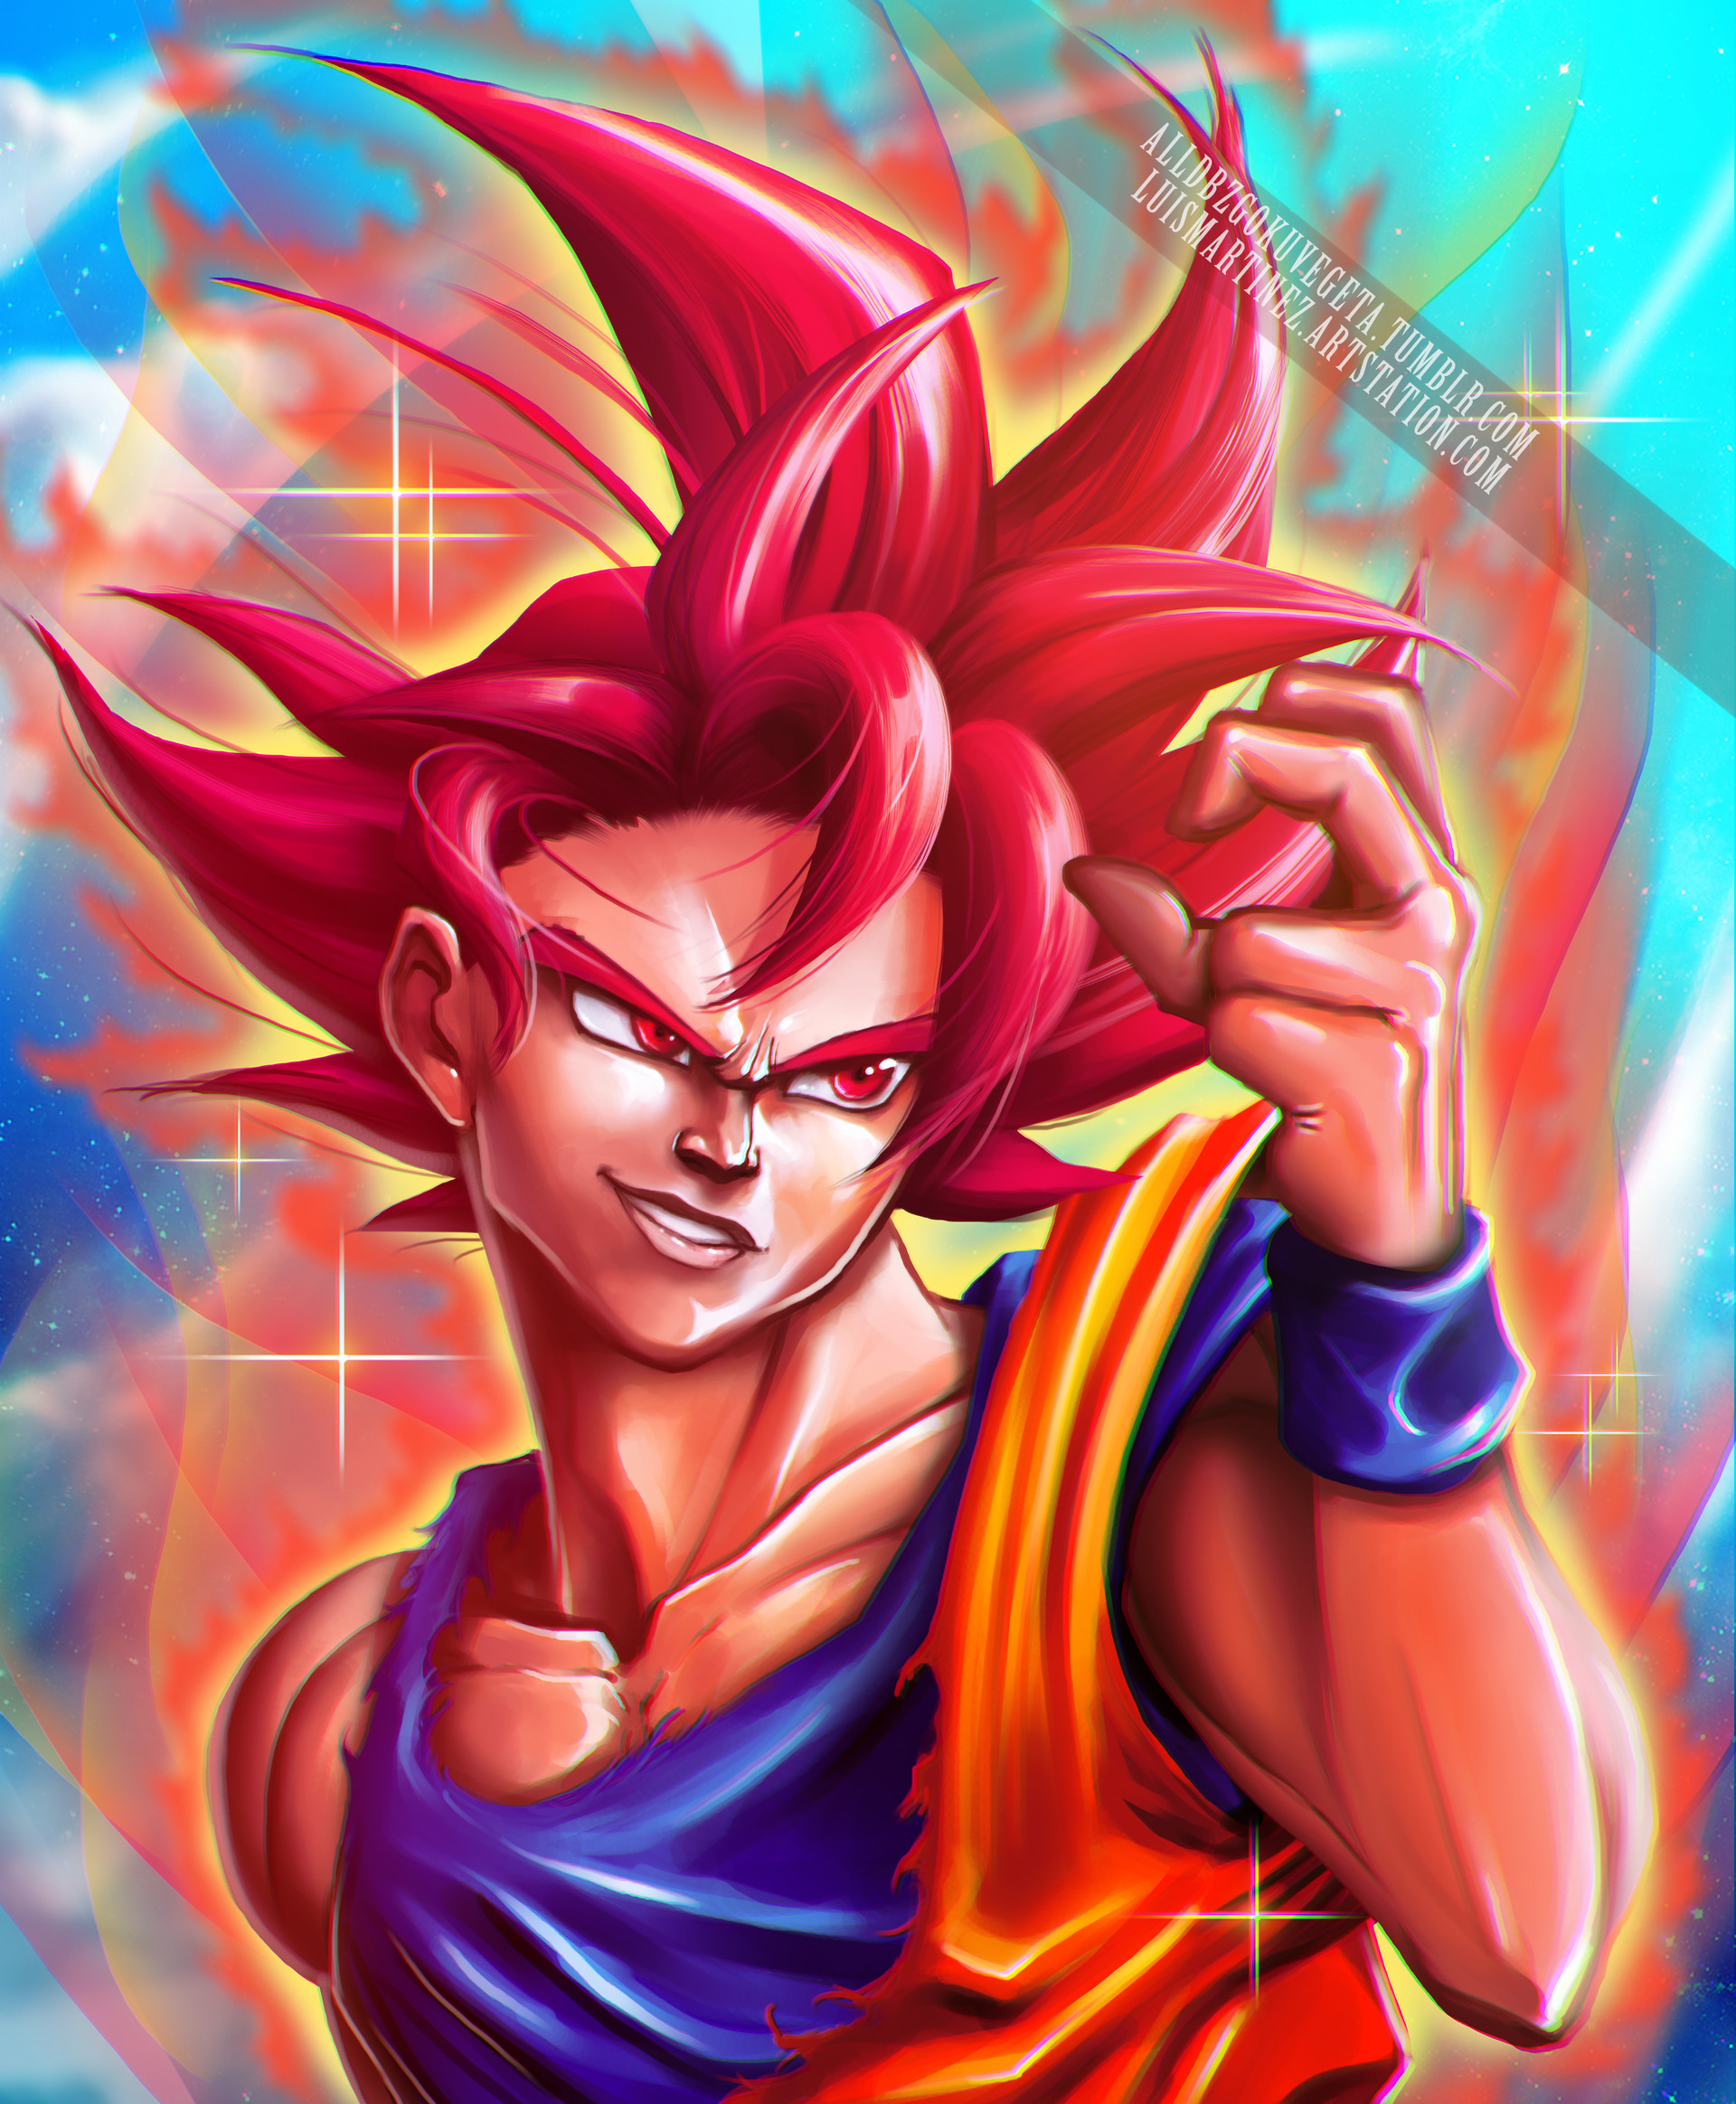 ArtStation - Goku Super Saiyan God, Luis Martinez